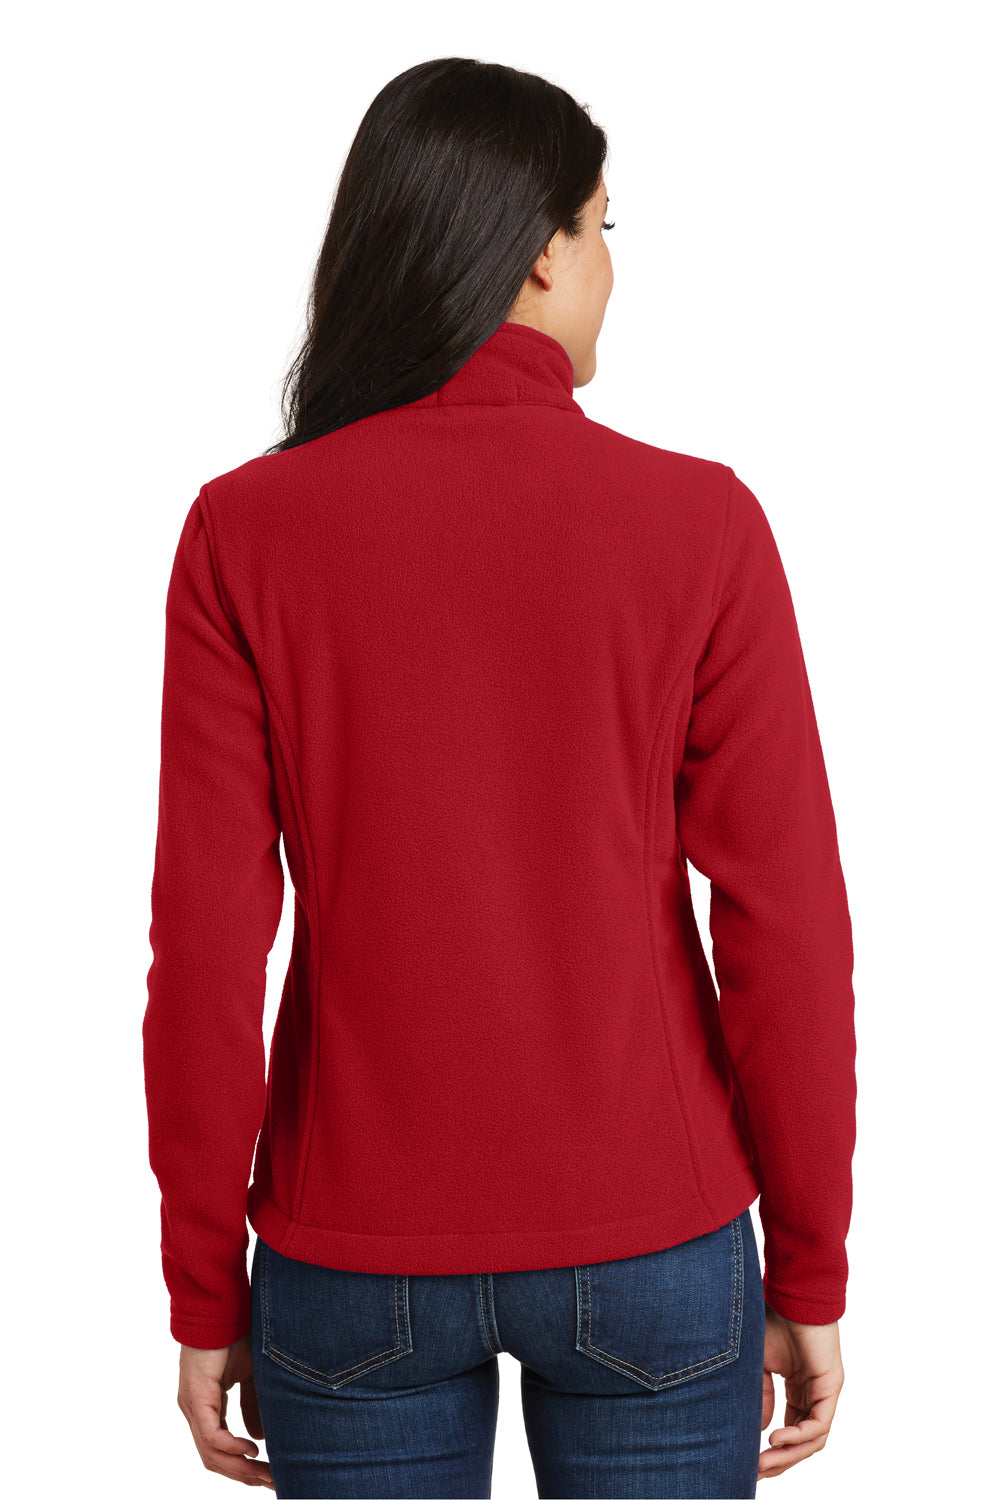 Port Authority L217 Womens Full Zip Fleece Jacket Red Back